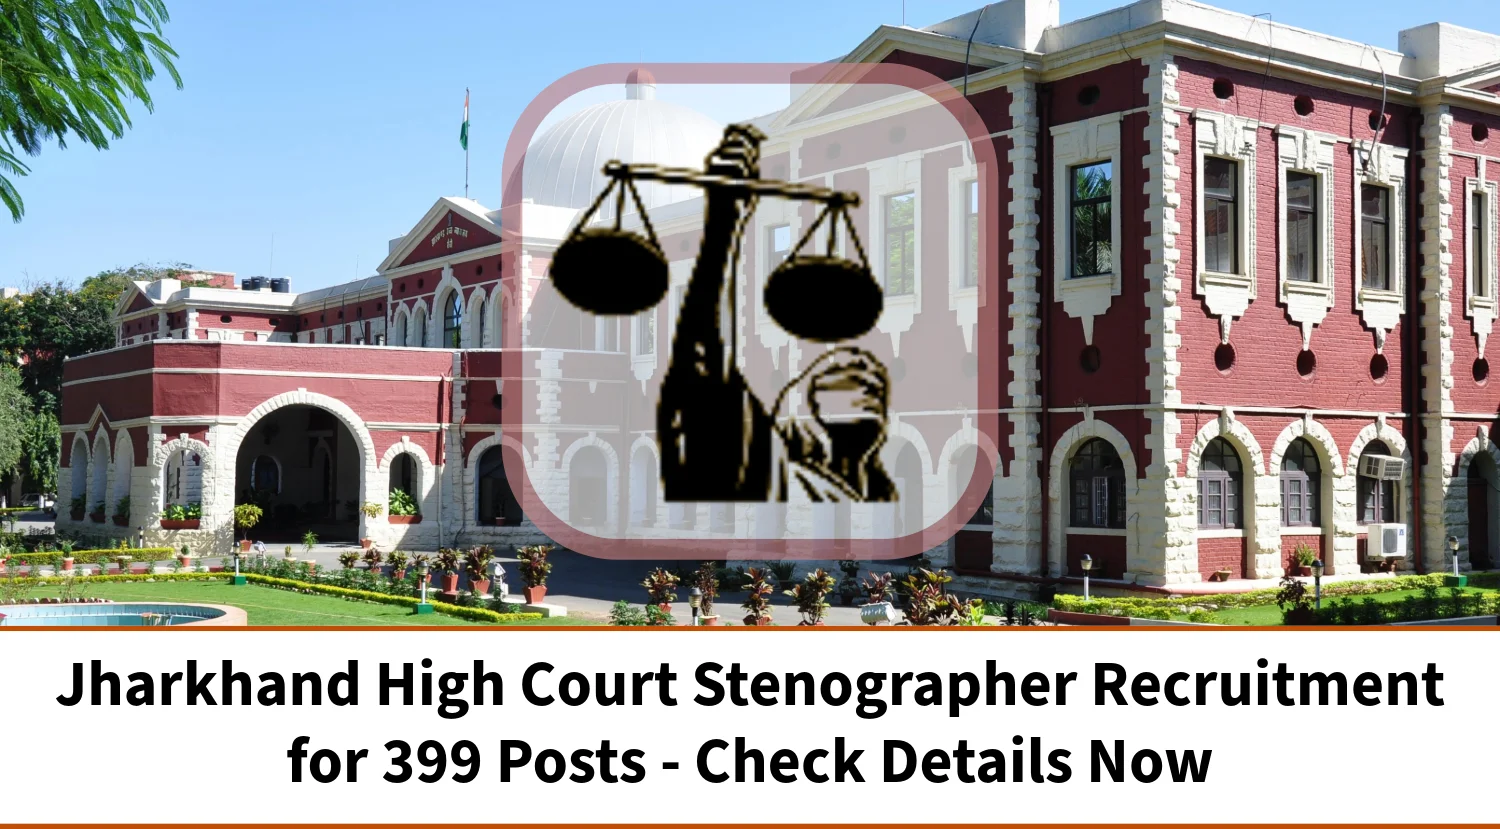 Jharkhand High Court Stenographer Recruitment for 399 Posts